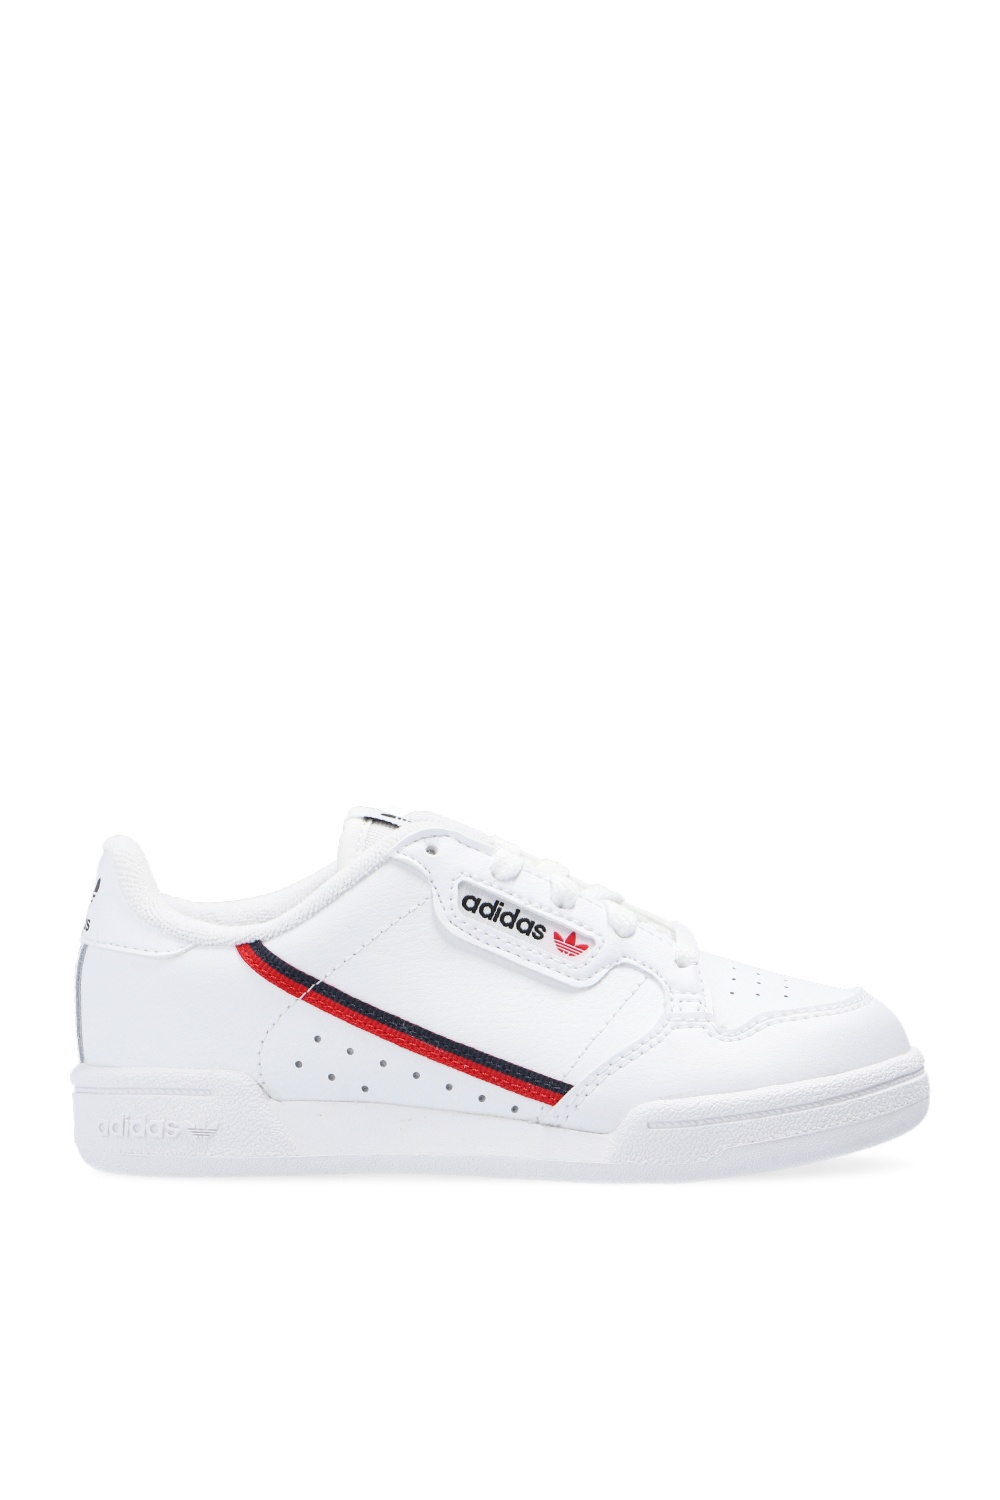 adidas austin Kids ‘Continental 80 C’ sneakers